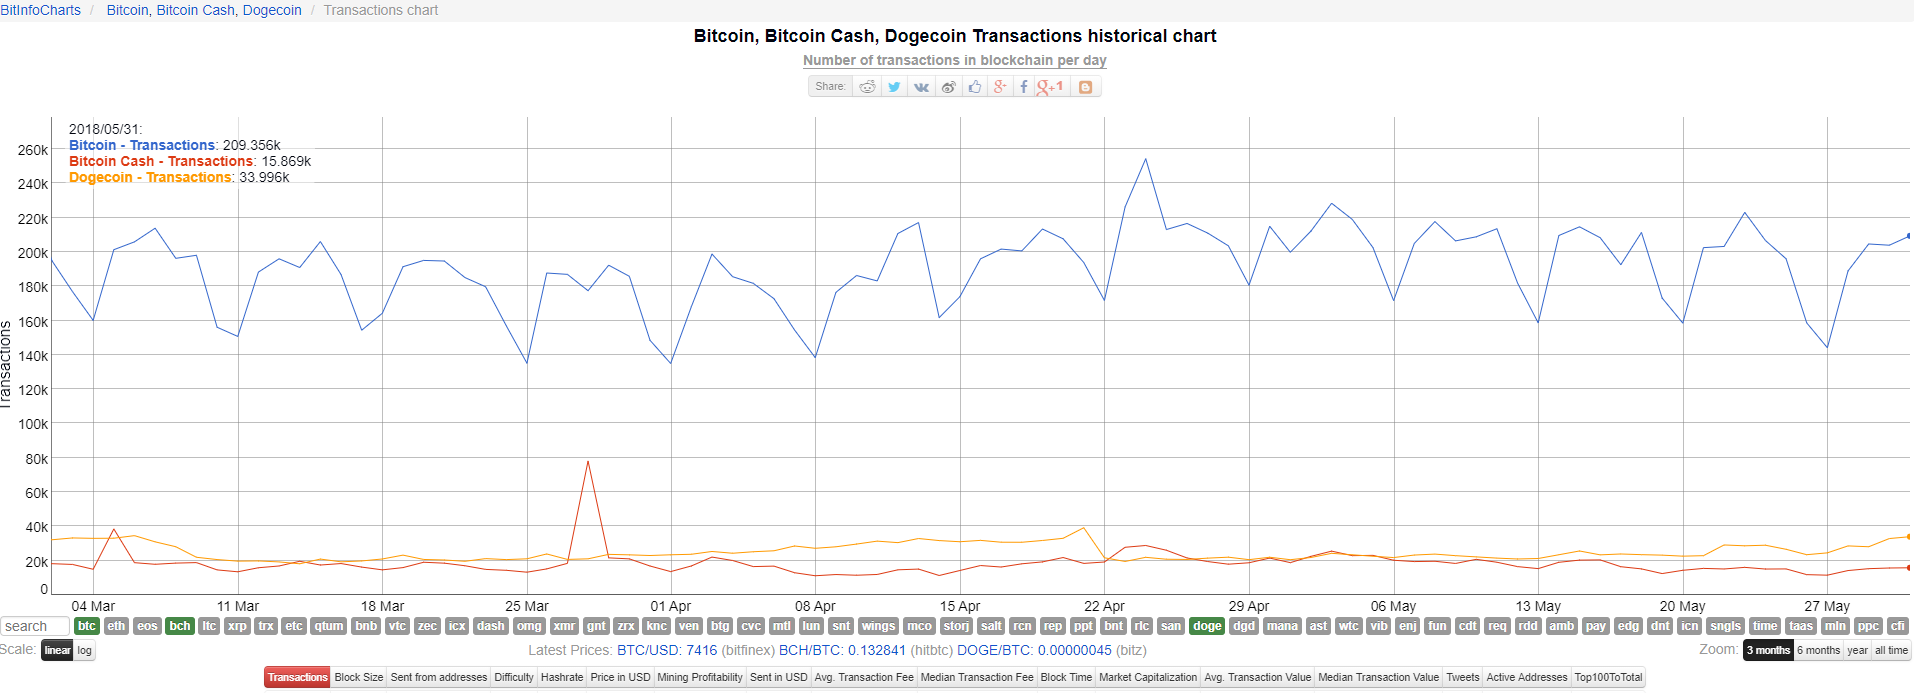 Dogecoin превзошел Bitcoin Cash по объему транзакций